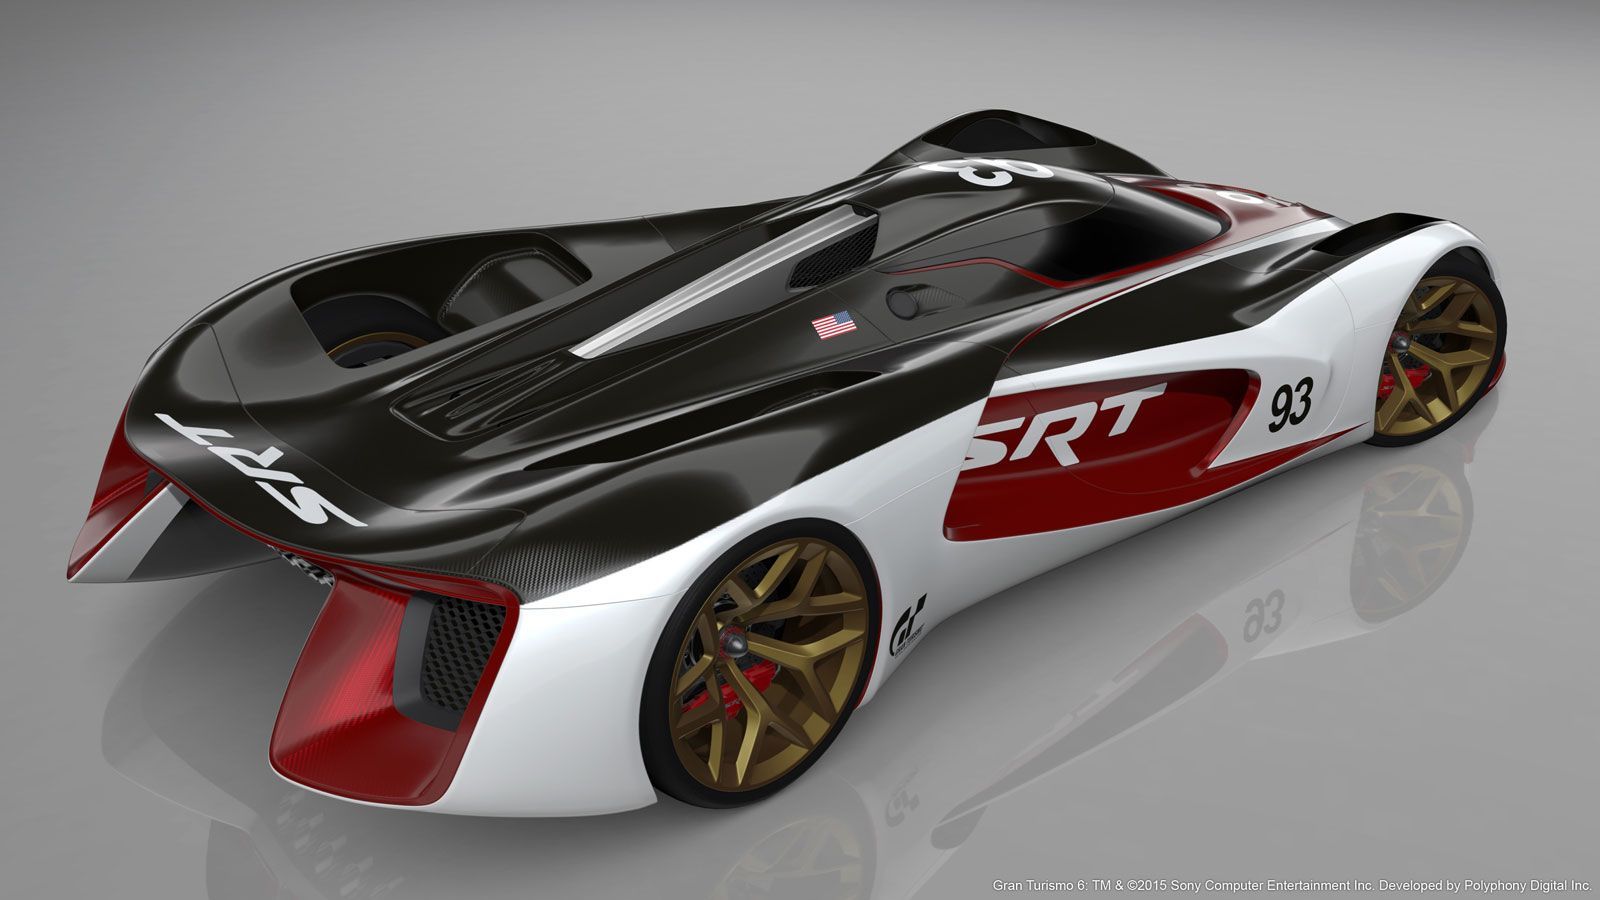 SRT Tomahawk GTS R Vision Gran Turismo Render. Concept Cars, Retro Racing Car, Super Cars